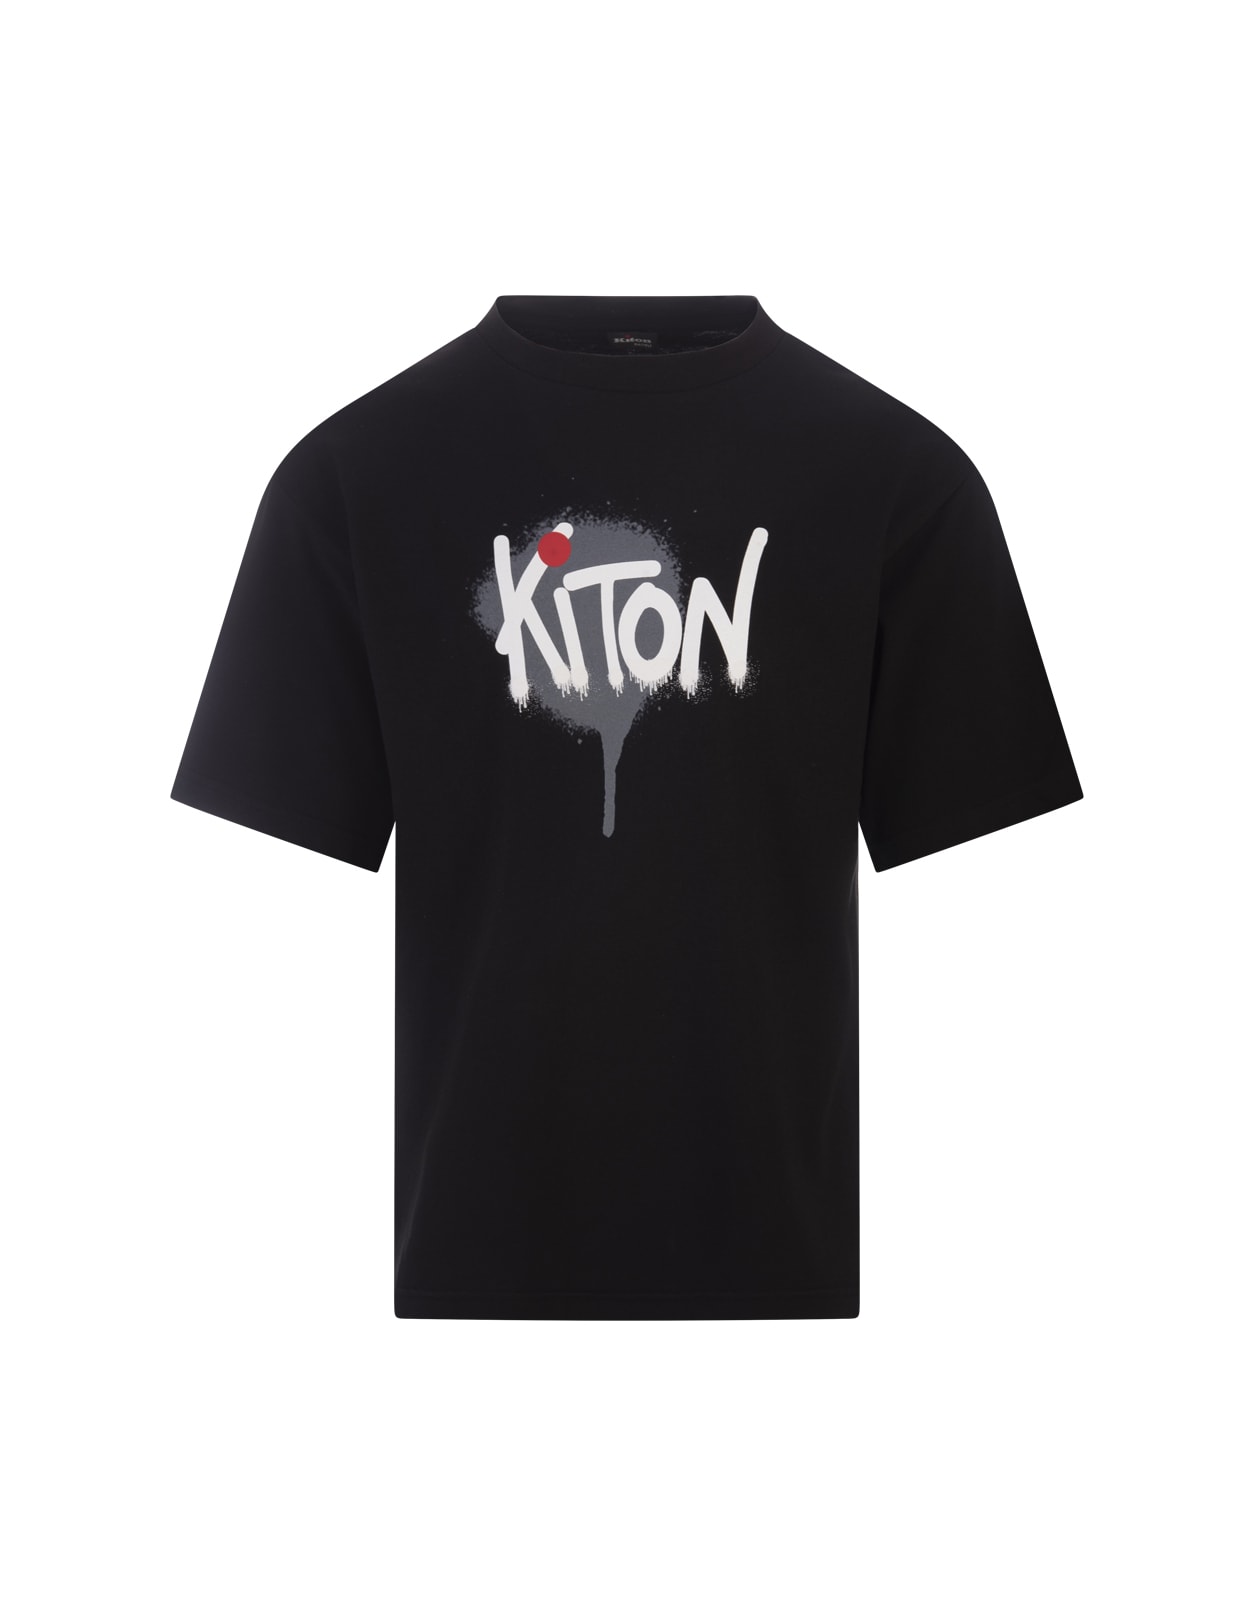 Kiton Black T-shirt With Graffiti Style  Logo